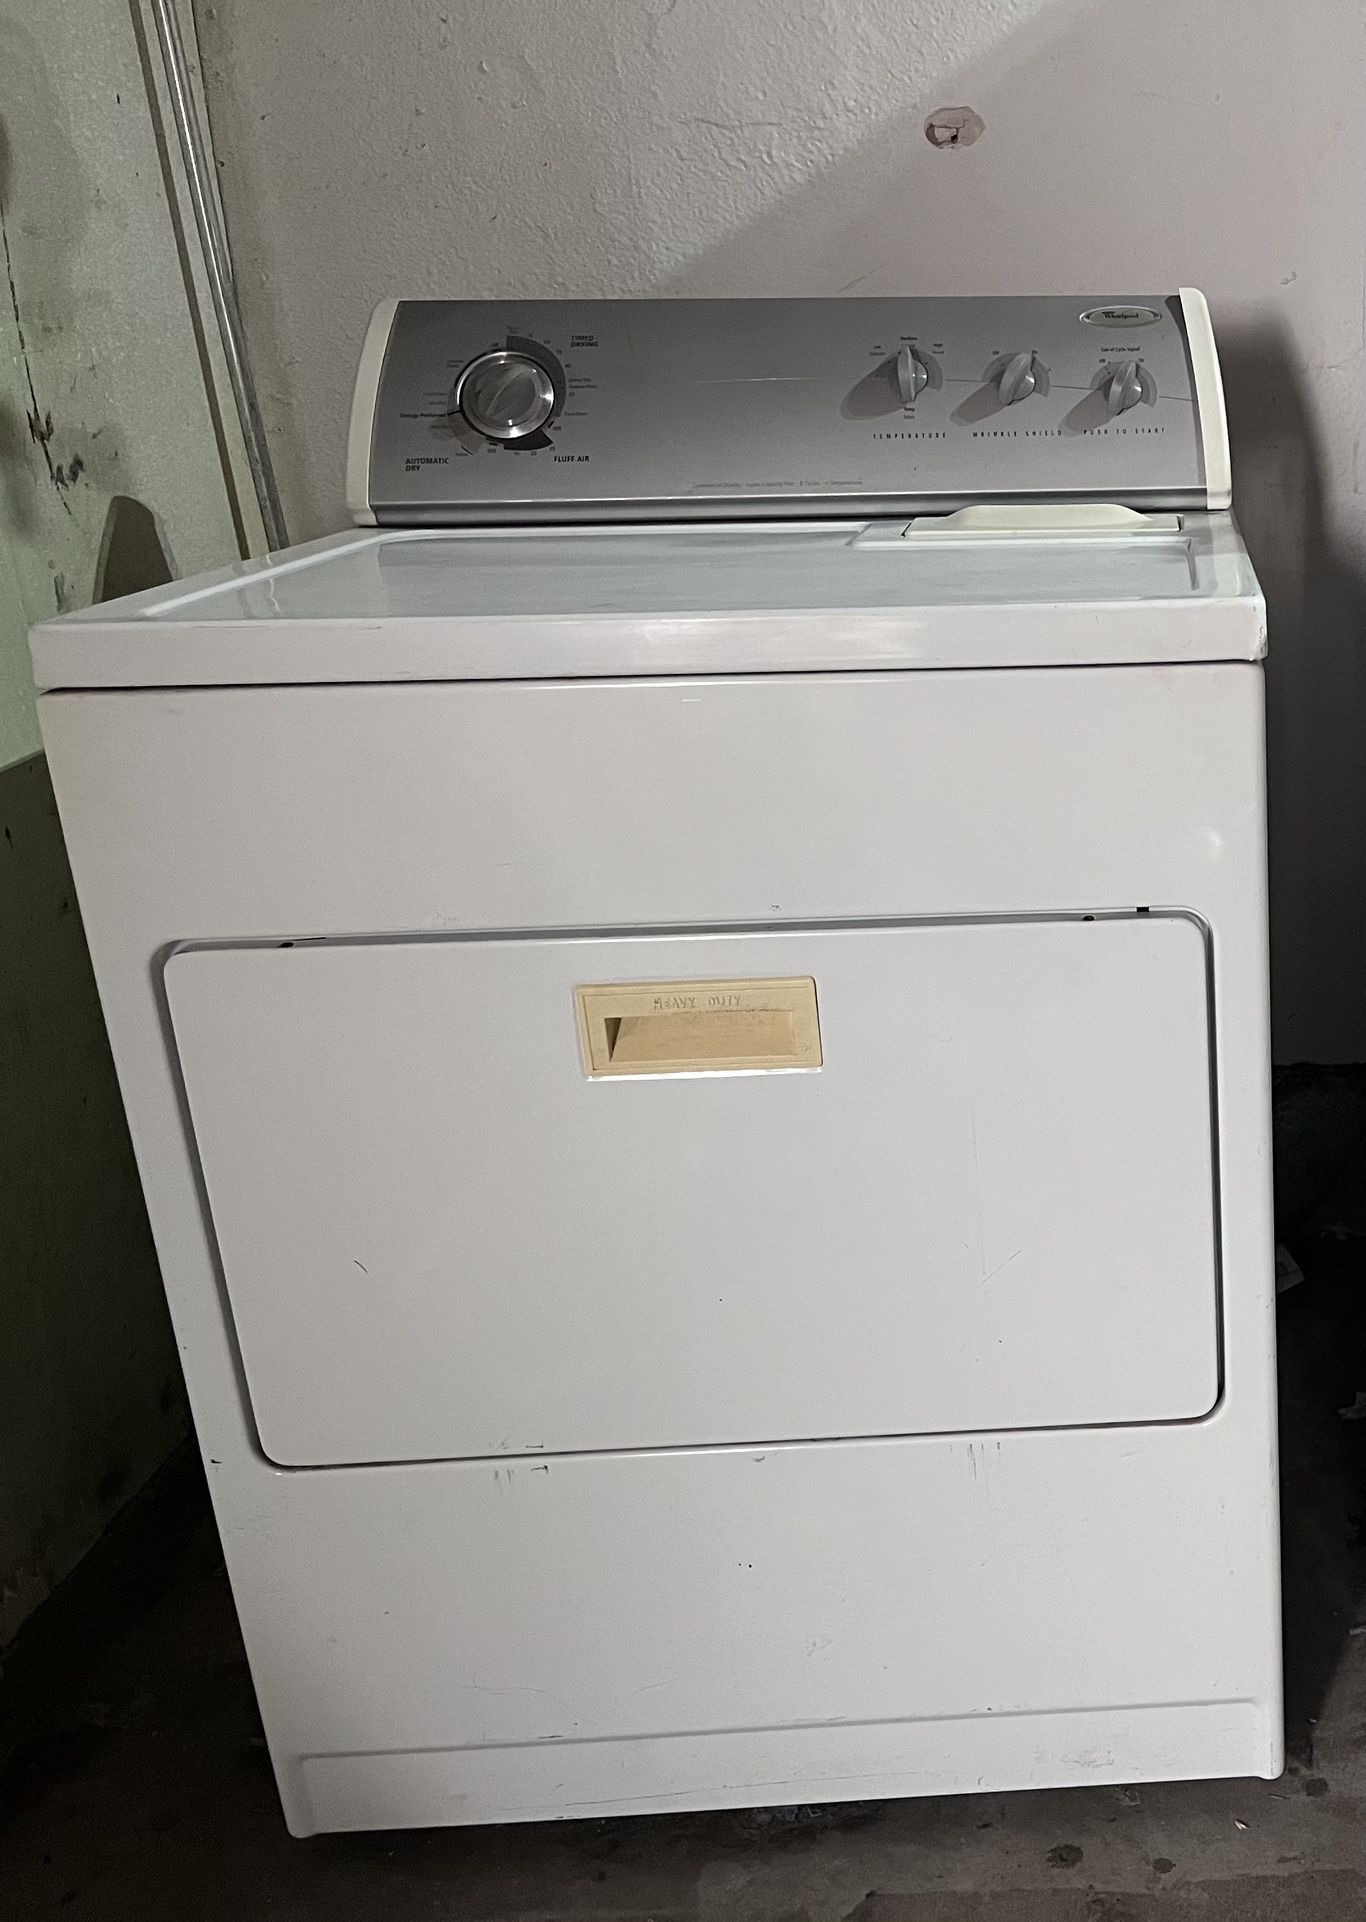 Electric Dryer 